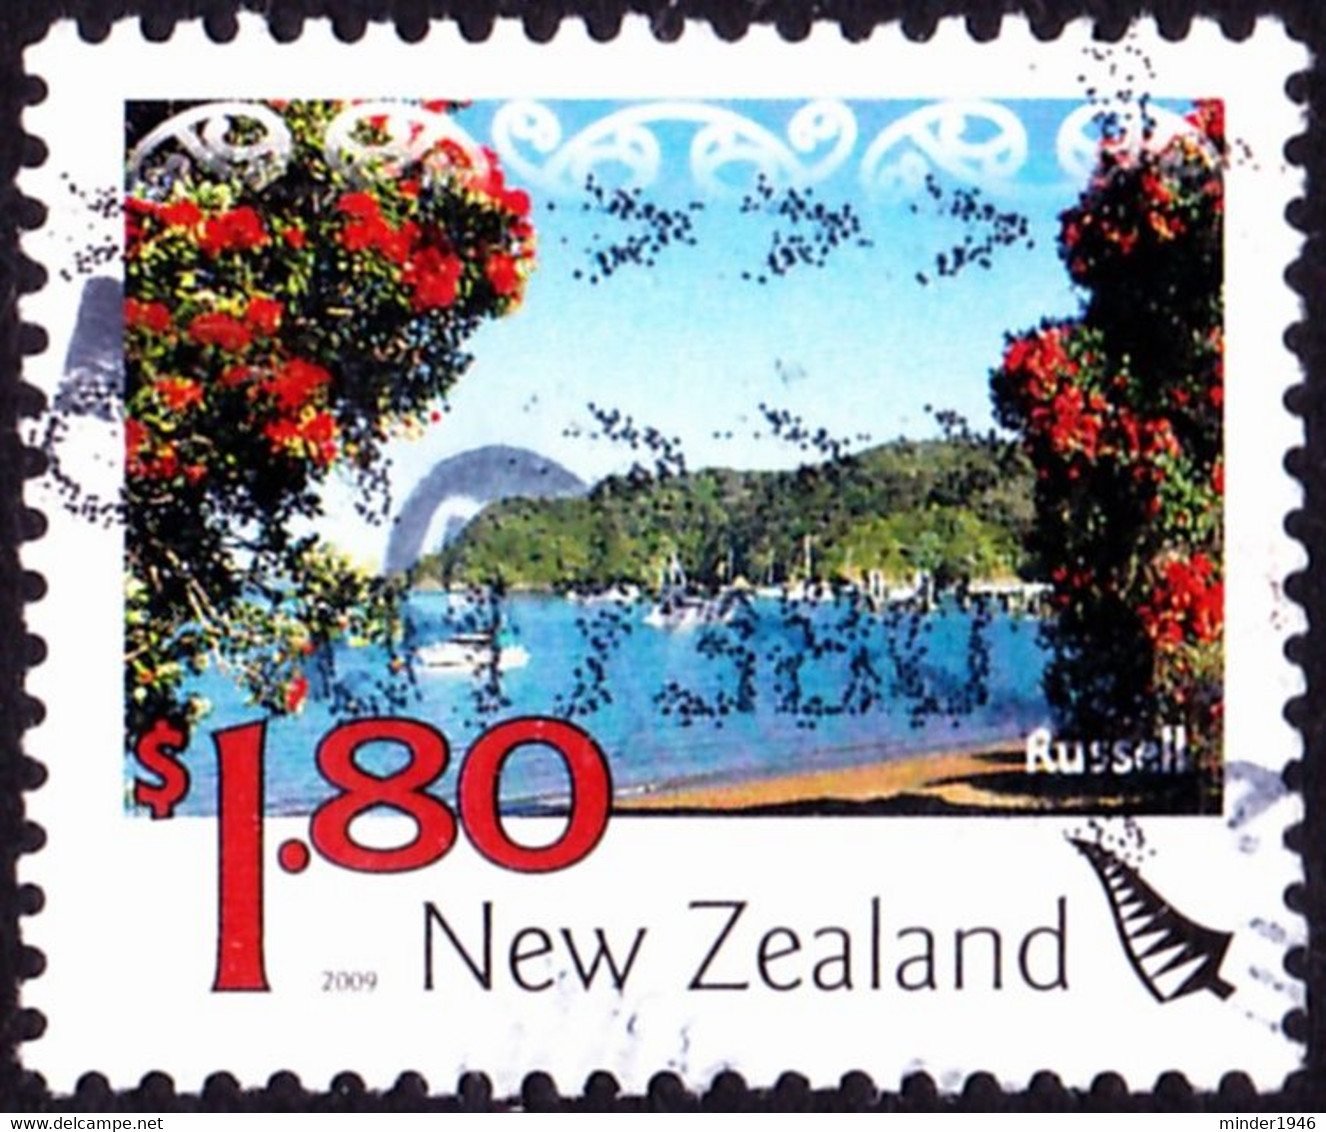 NEW ZEALAND 2009 QEII $1.80 Multicoloured, Scenic-Russel SG3156 FU - Gebraucht